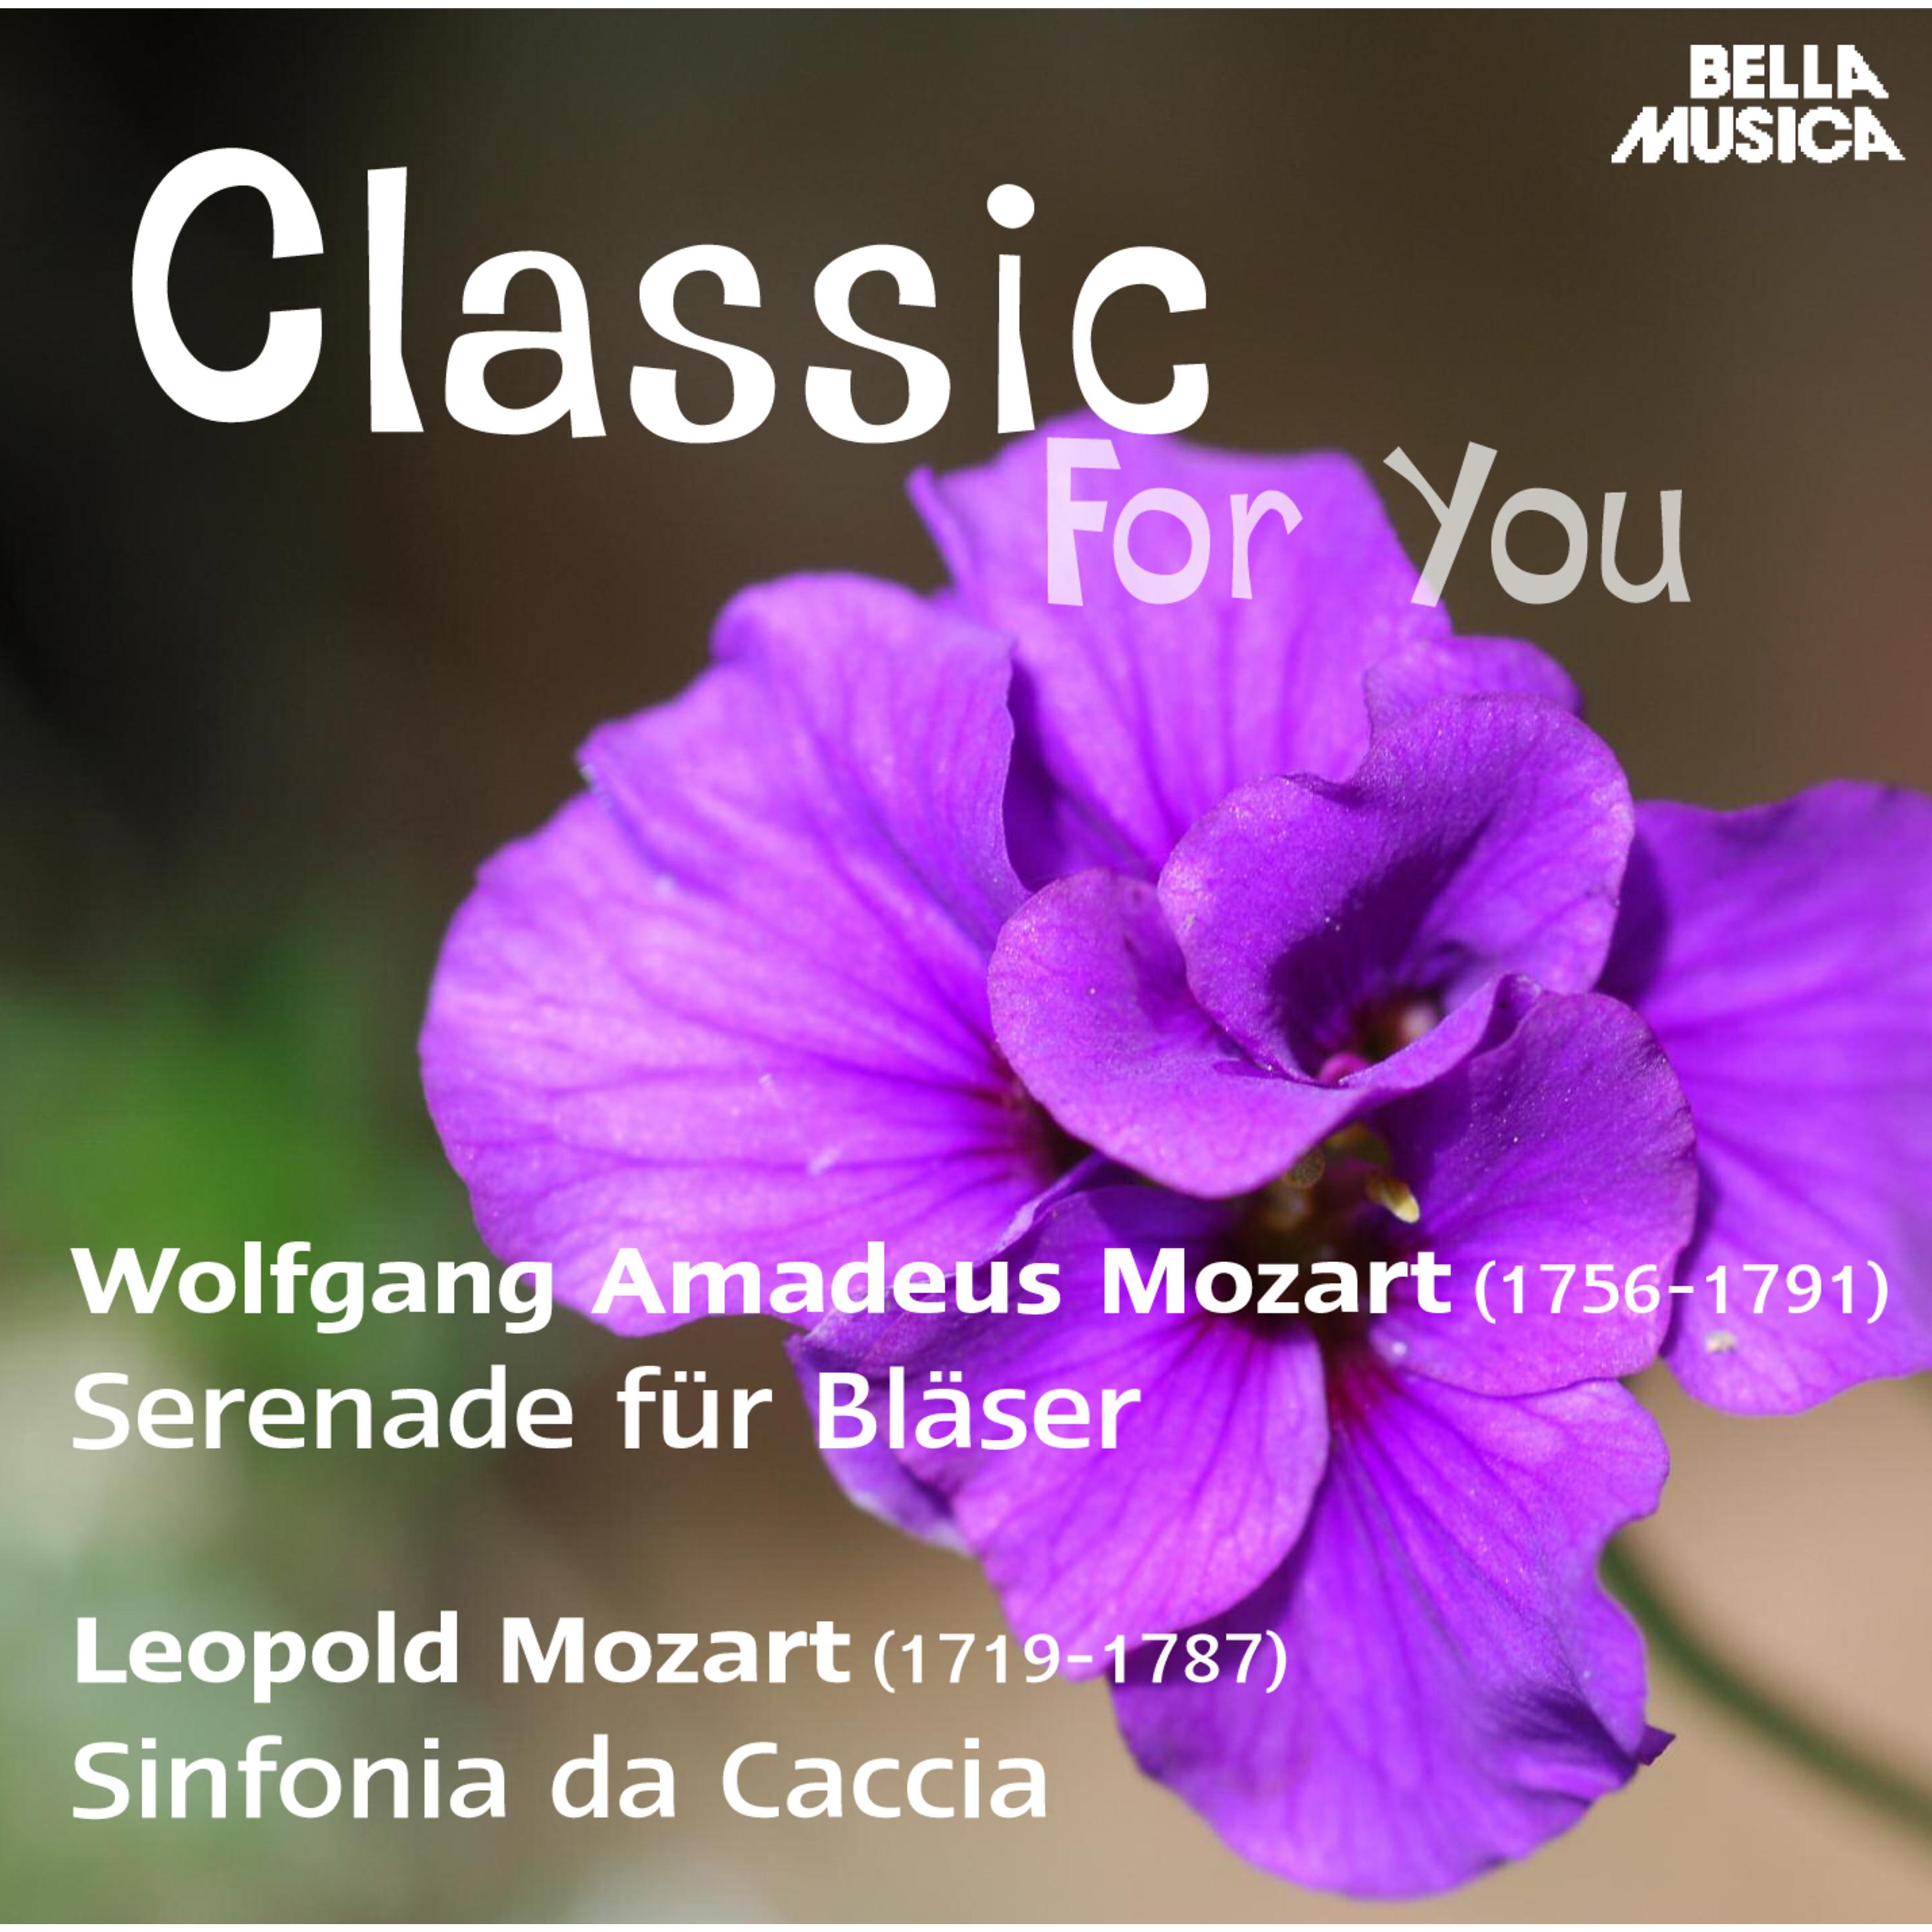 Serenade No. 10 fü r Orchester in BFlat Major, K. 361: I. Largo  Molto allegro